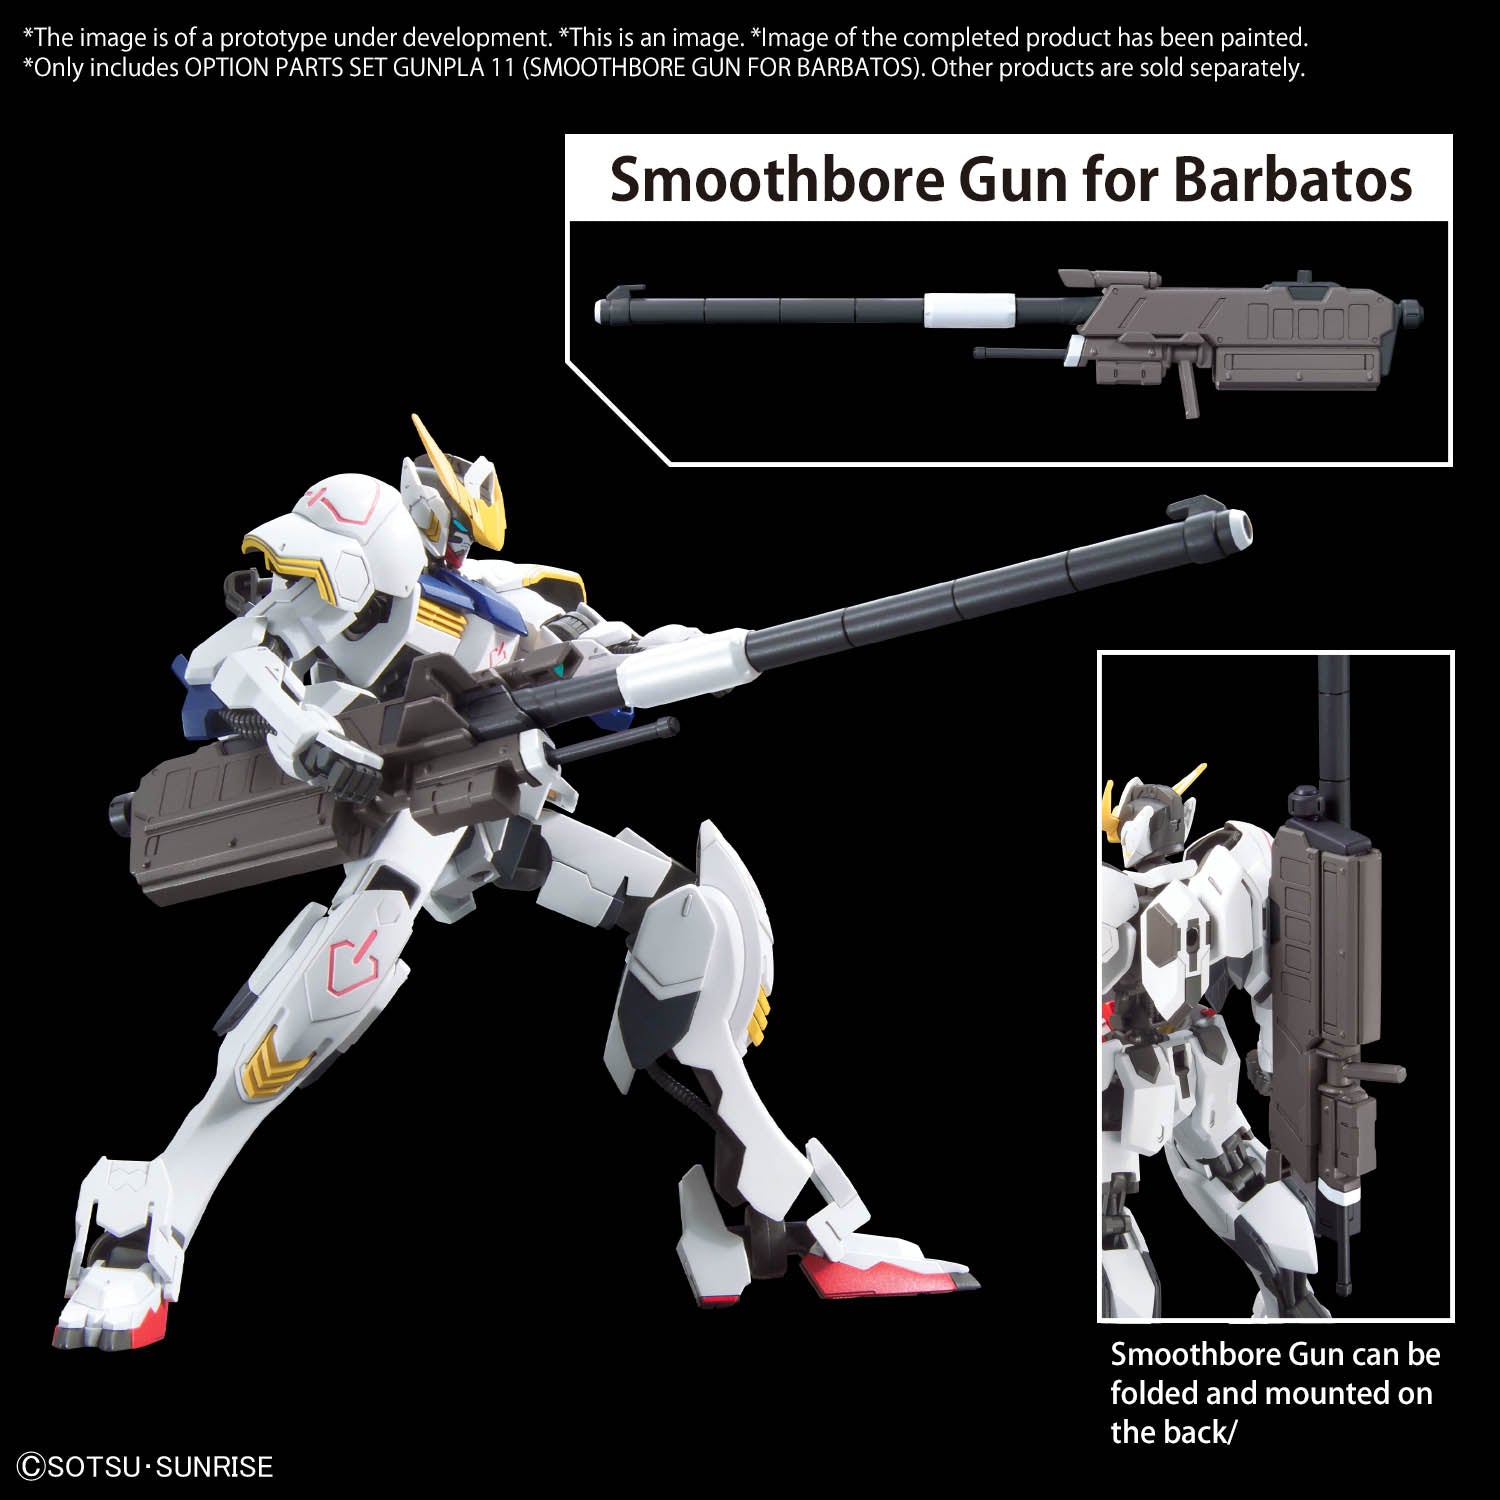 Option Parts Set Gunpla 11 (Smoothbore Gun for Barbatos)